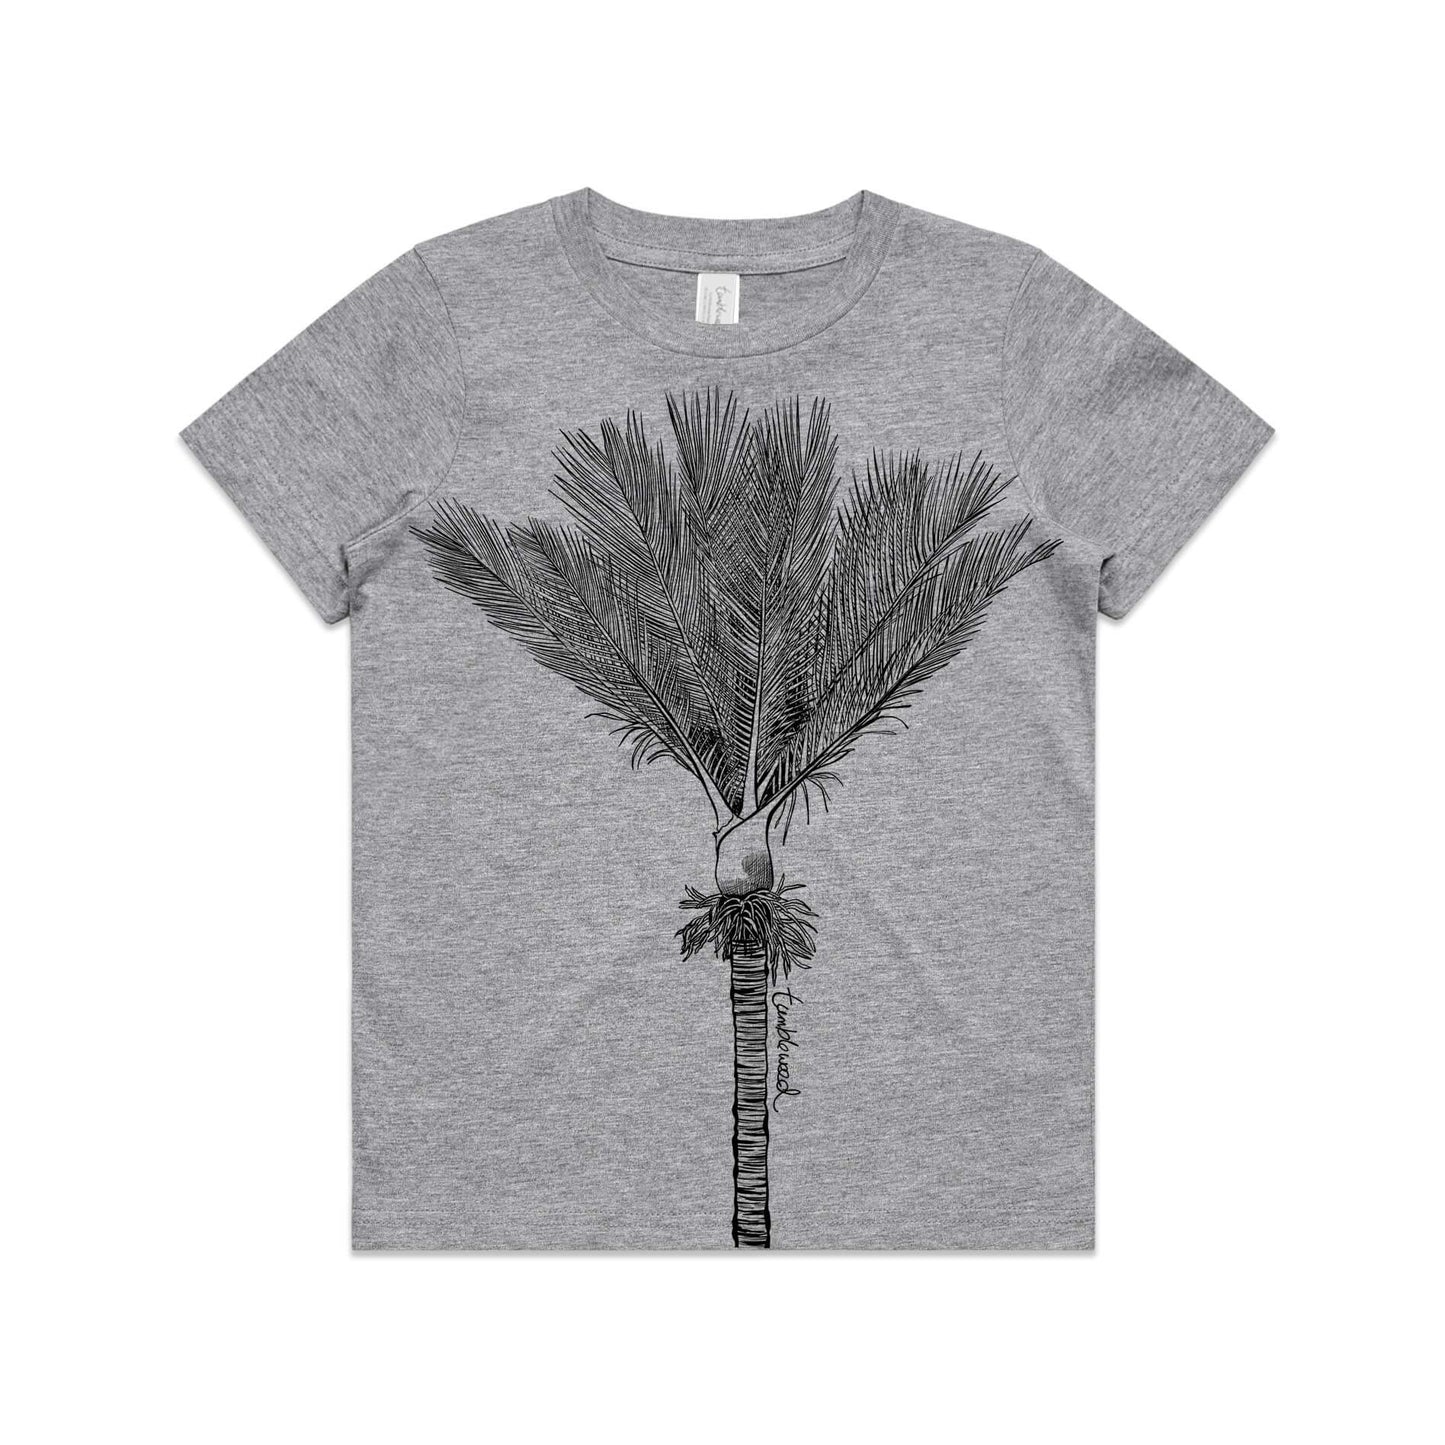 Grey marle, cotton kids' t-shirt with screen printed nīkau design.